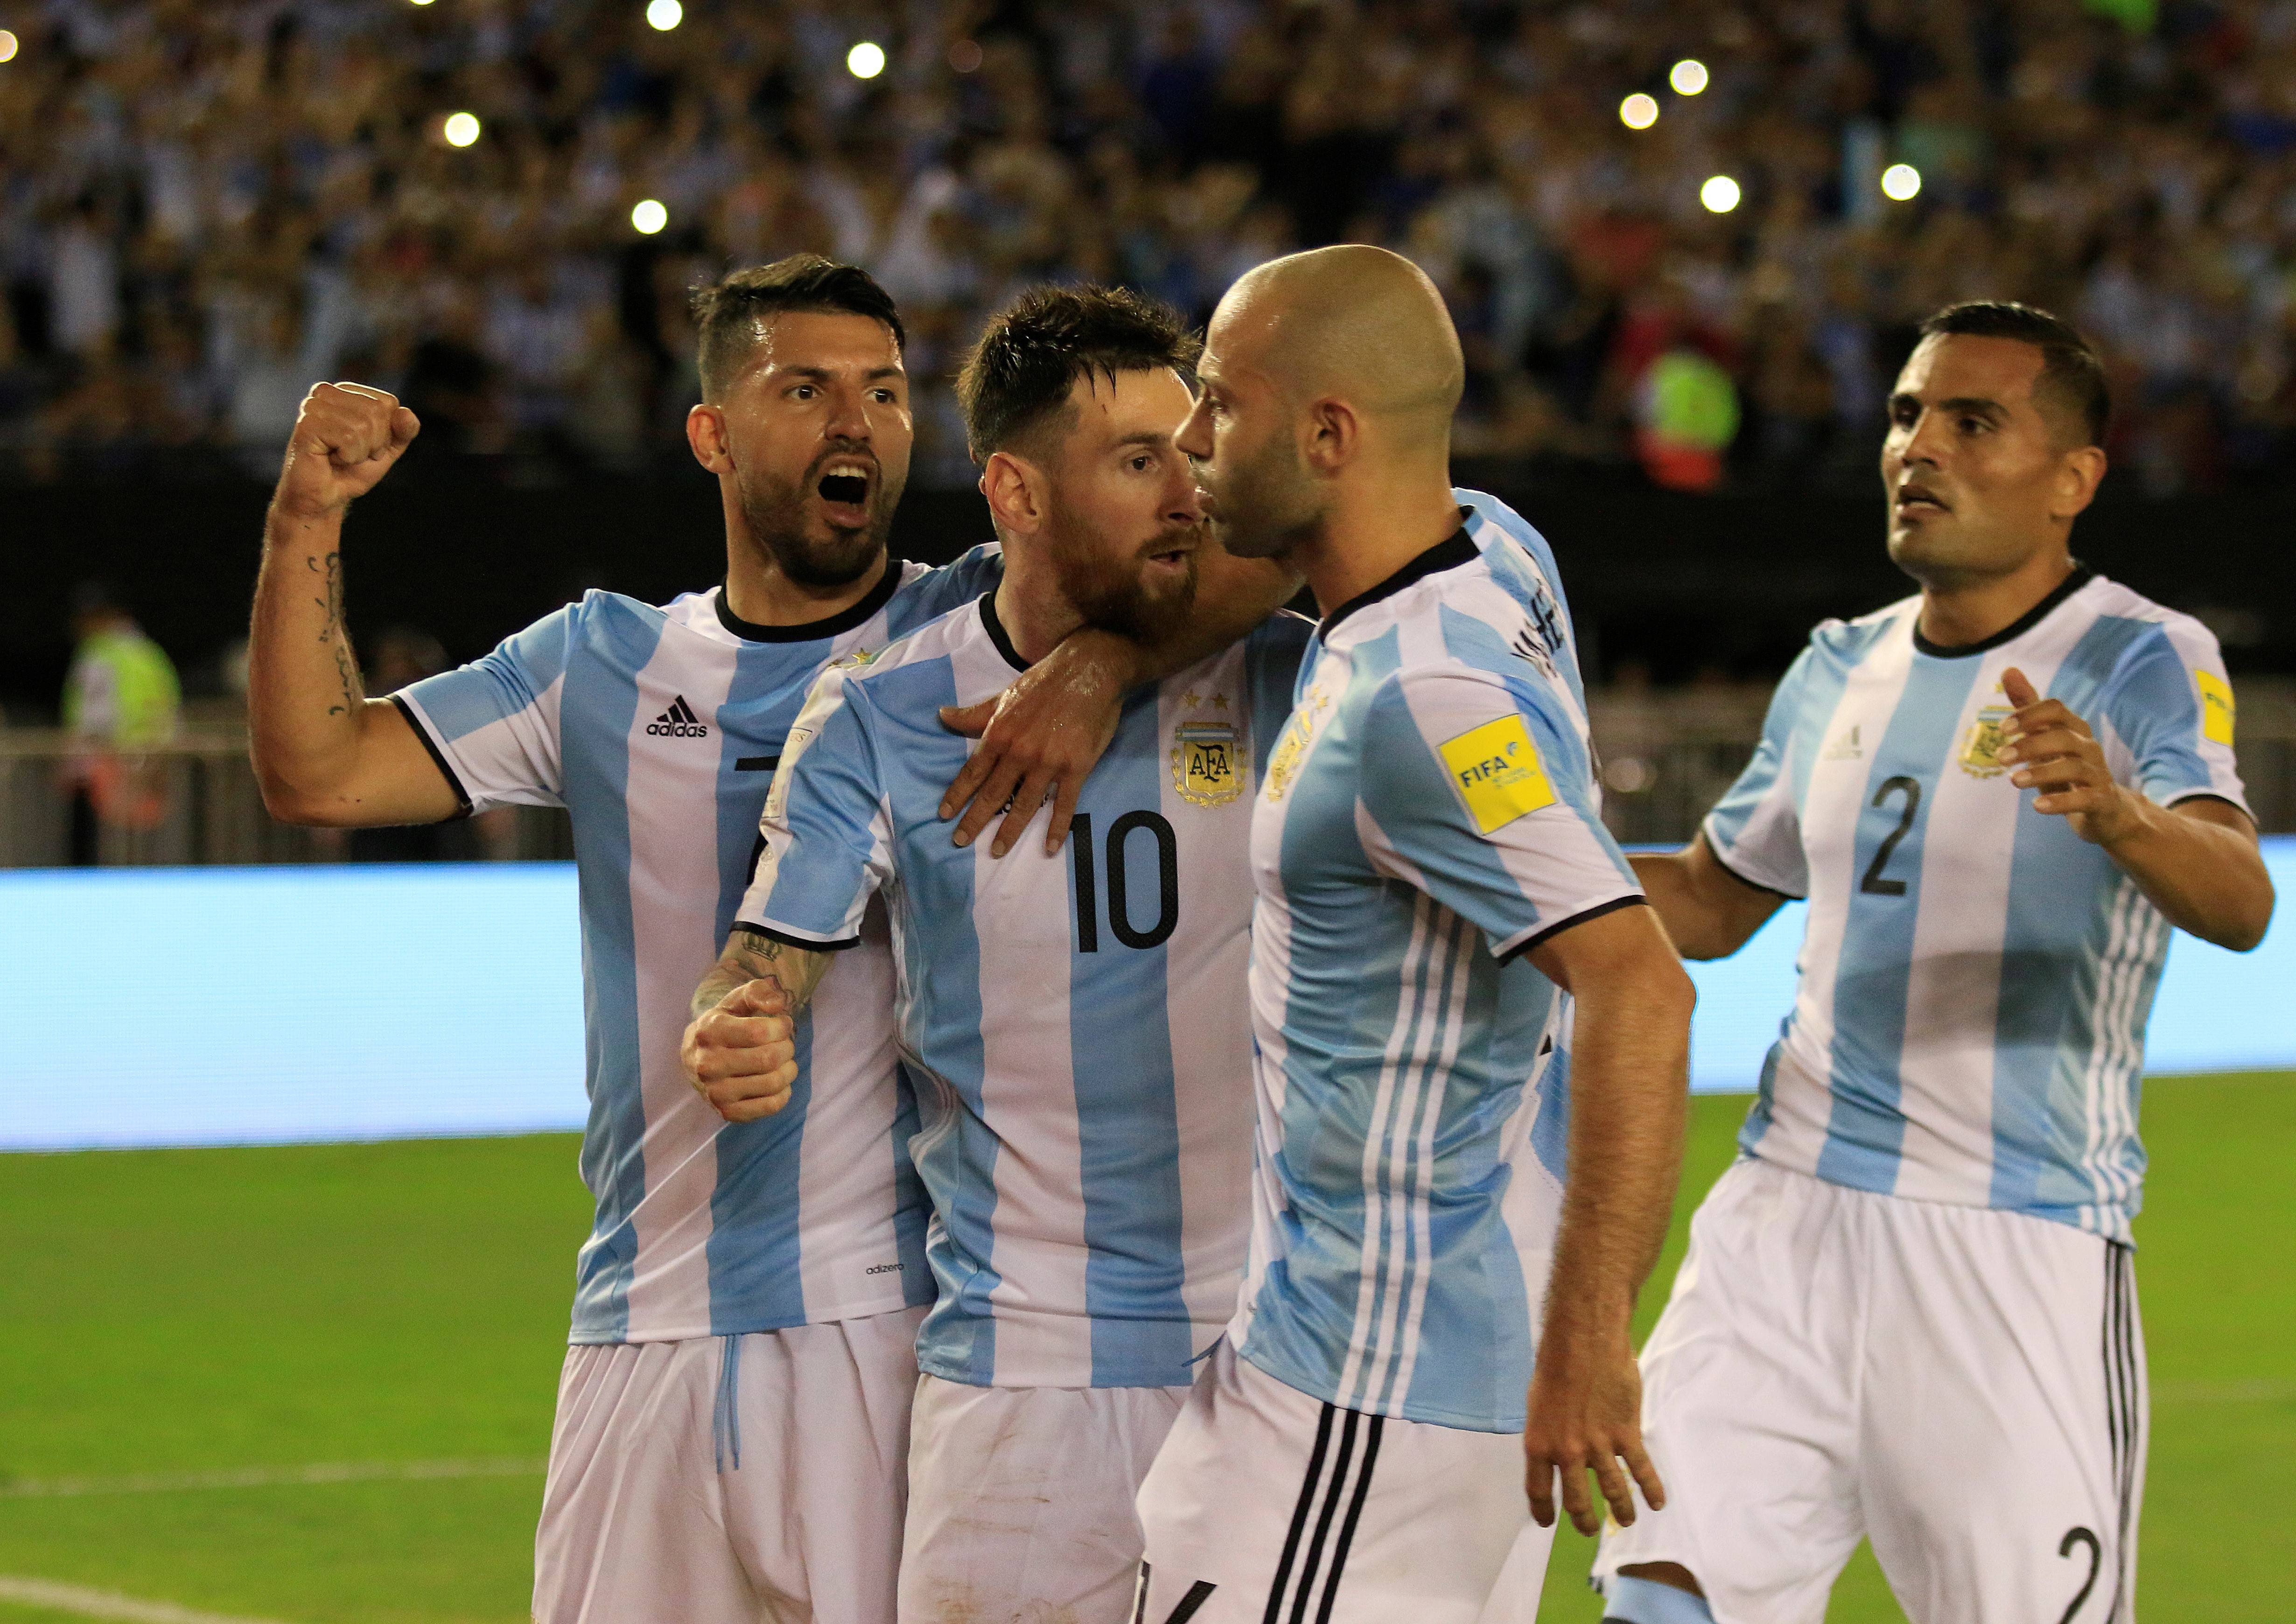 Singapore to host Argentina at National Stadium in June